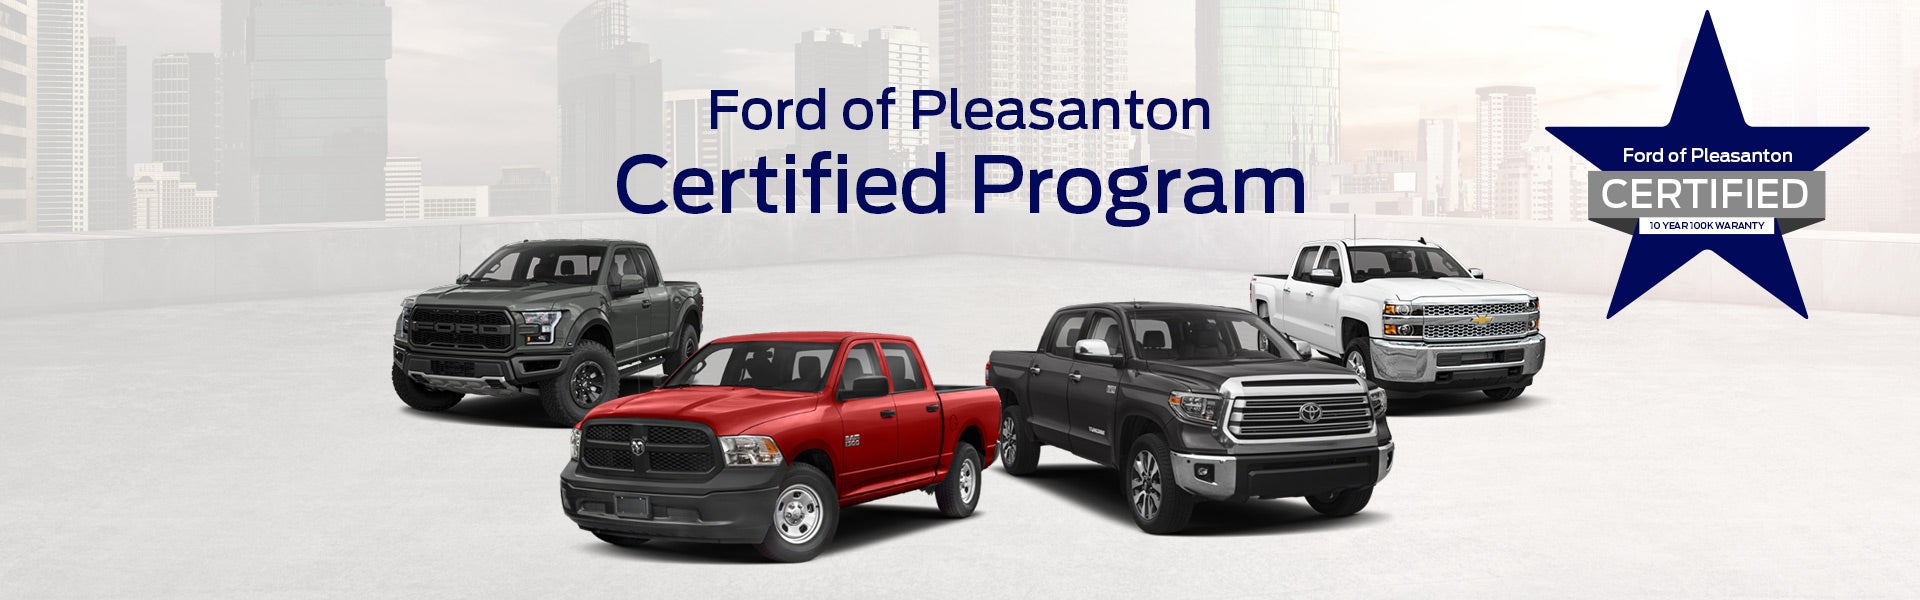 Ford of Pleasanton Certified Program